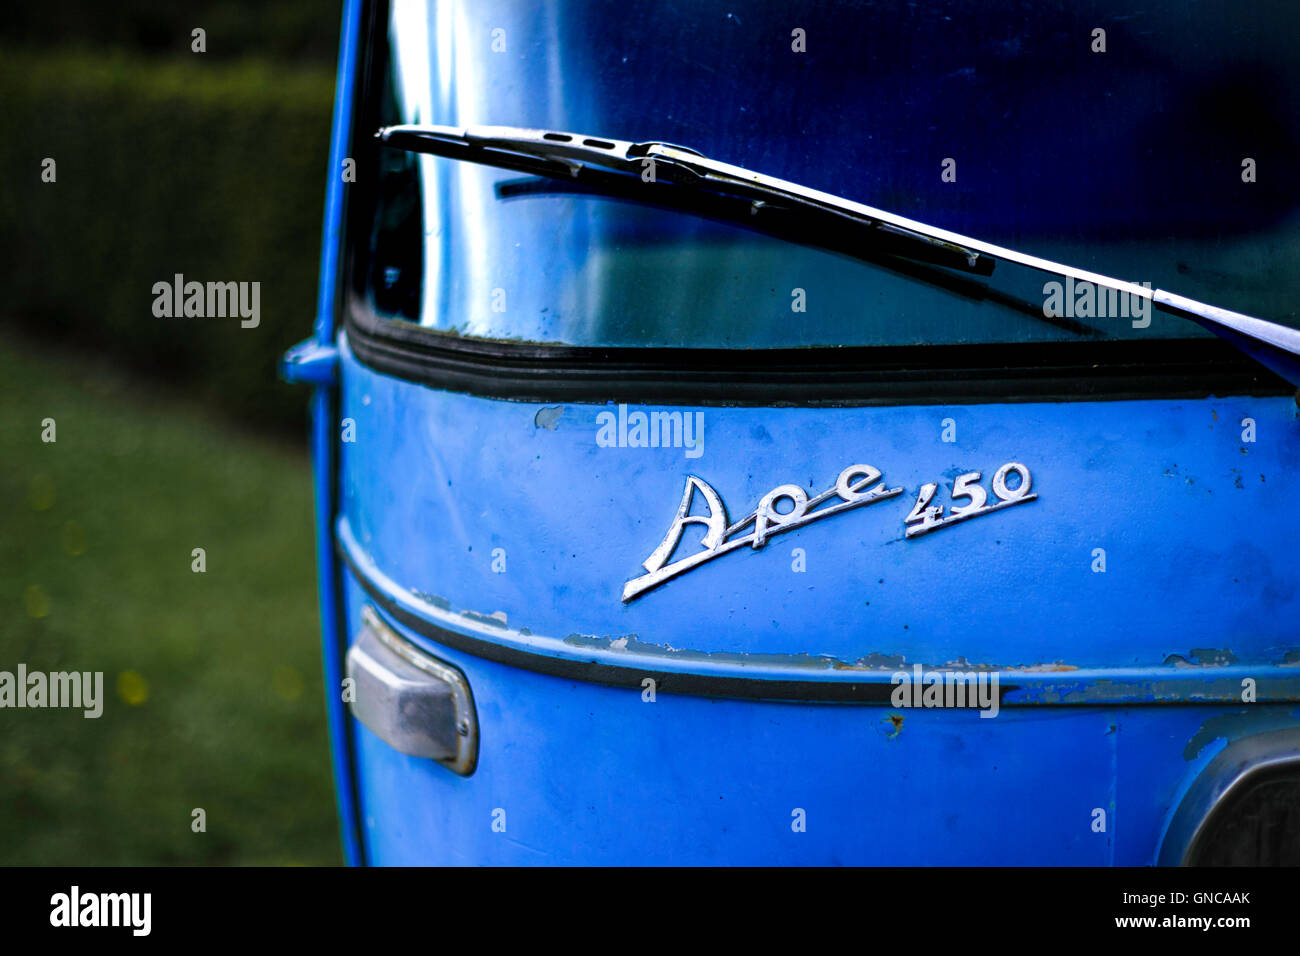 Blue rusting Piaggio Ape 450 three-wheel motorcycle van in garden Stock Photo